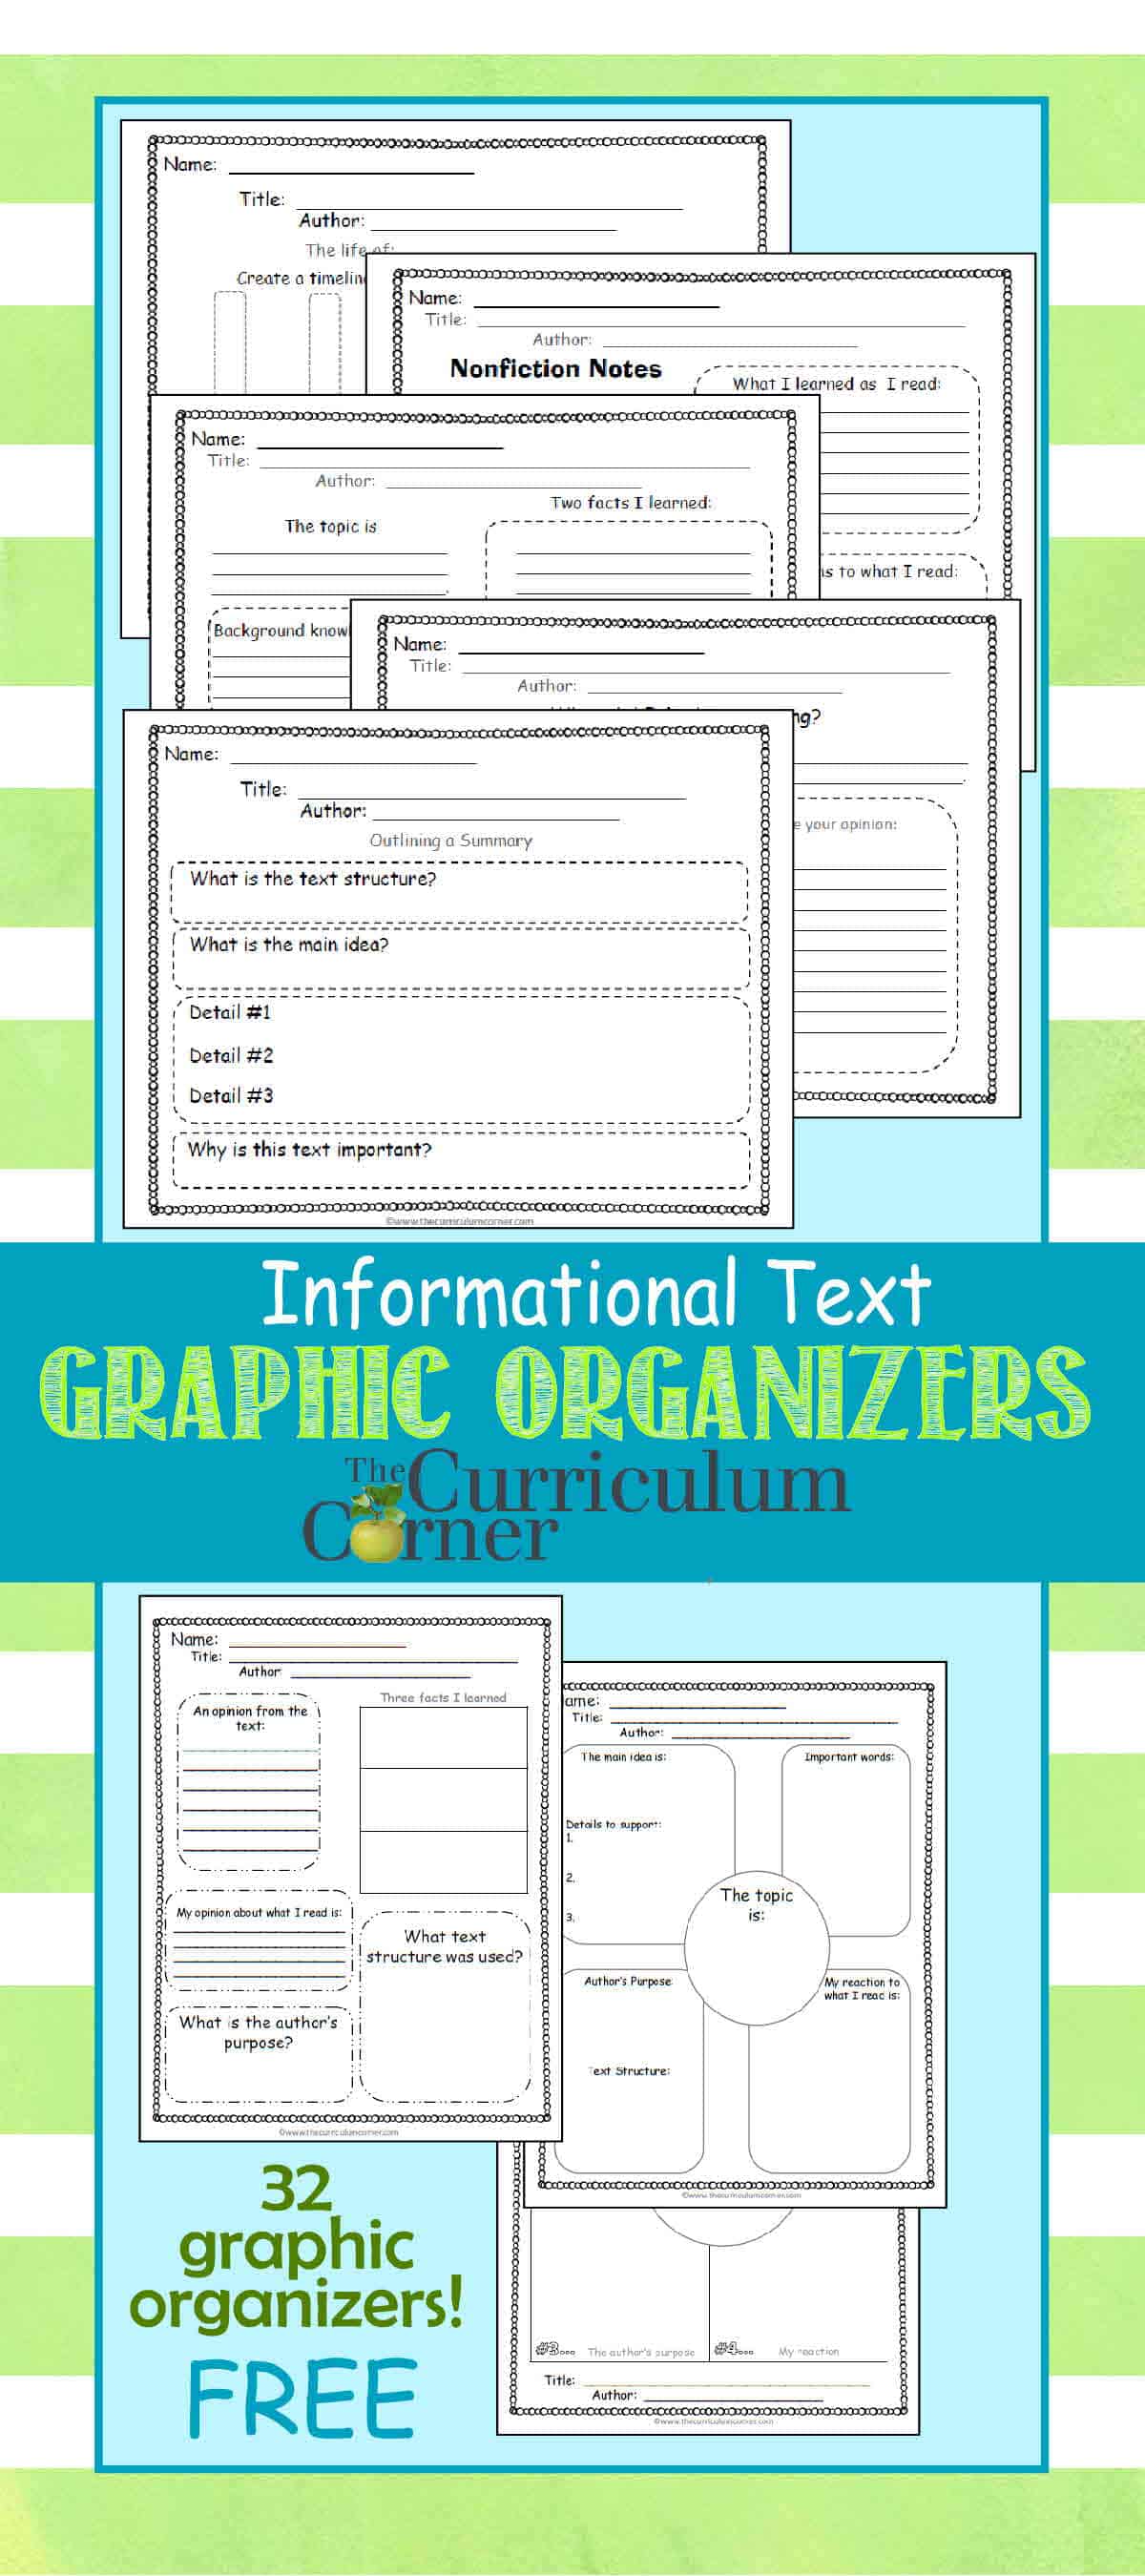 Informational Text Graphic Organizers - The Curriculum Corner 4-5-6